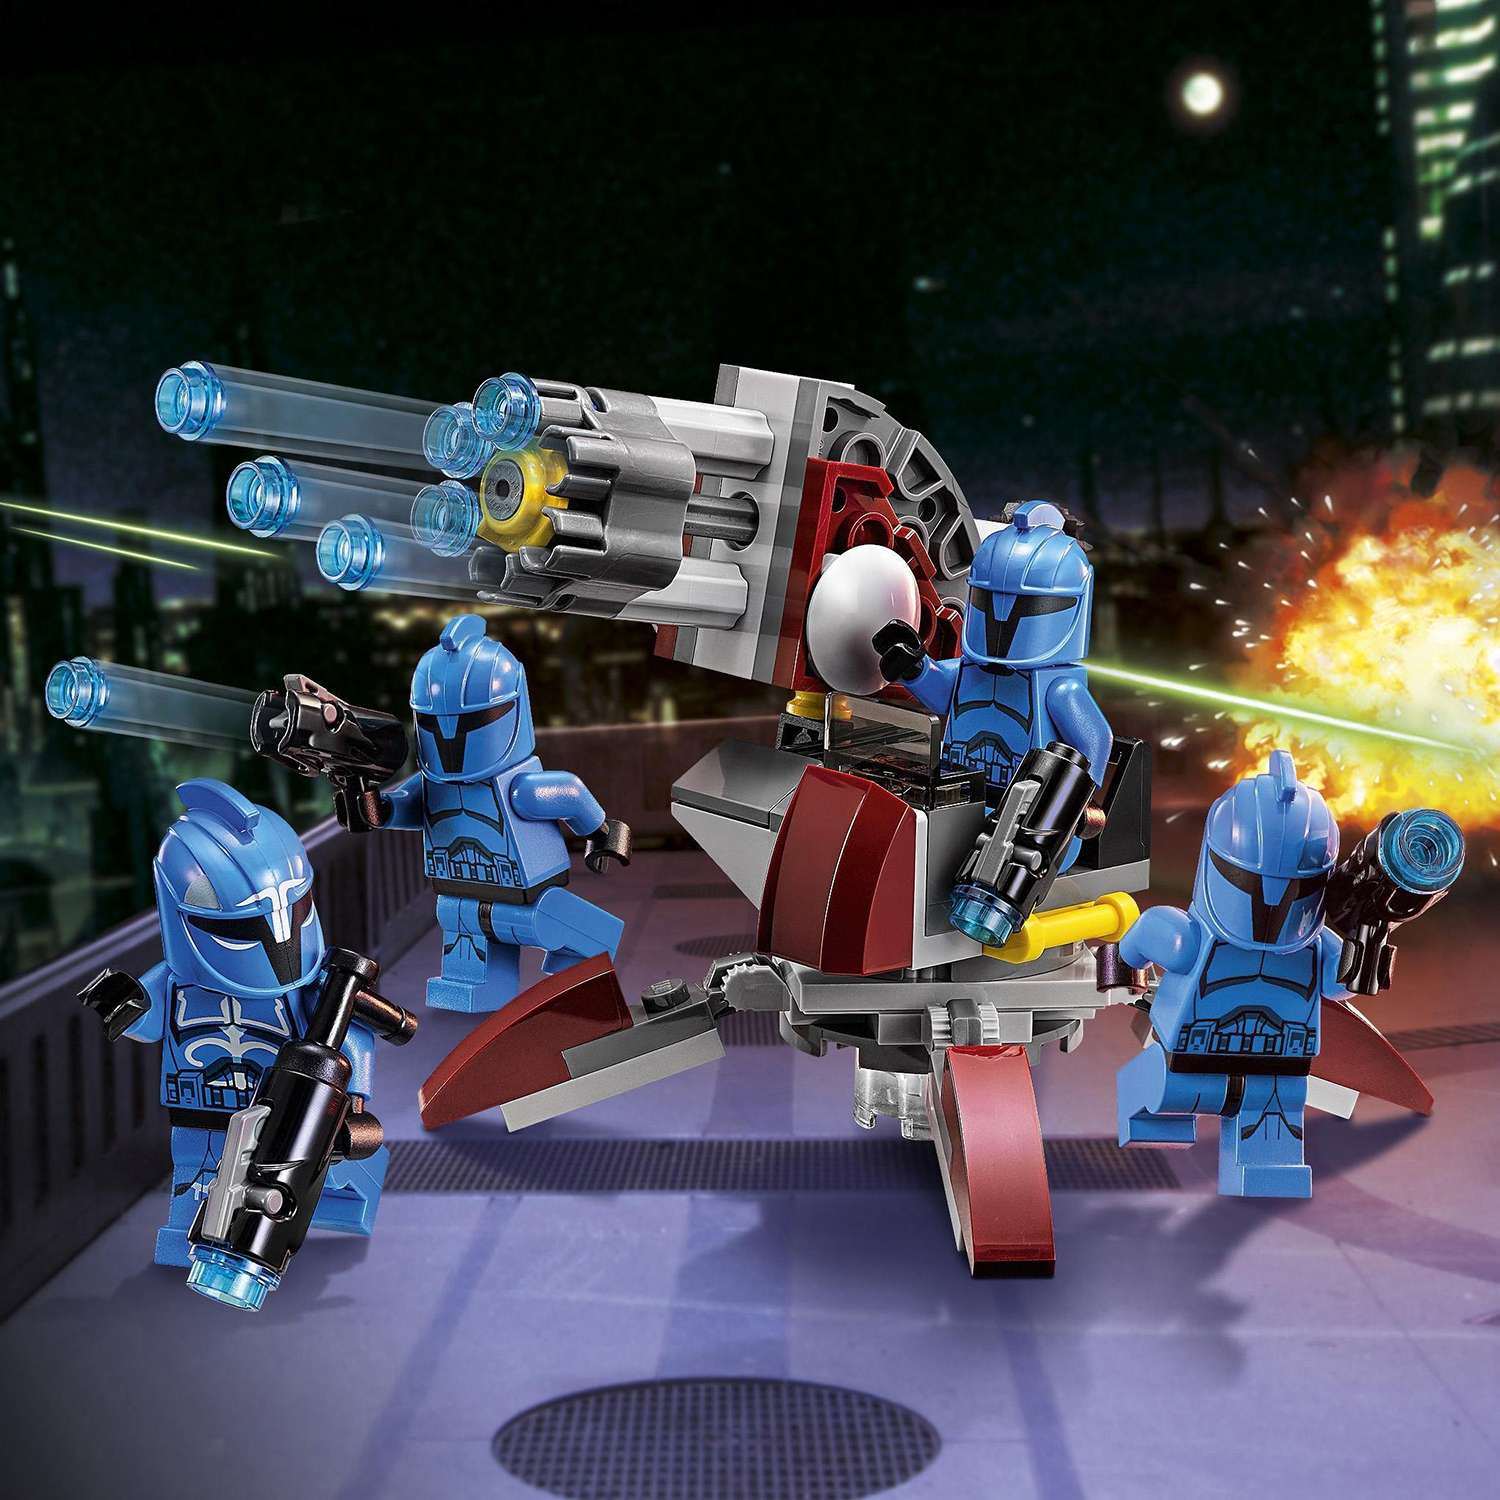 Конструктор LEGO Star Wars TM Элитное подразделение Коммандос Сената (Senate Commando Troopers™) (75088) - фото 4